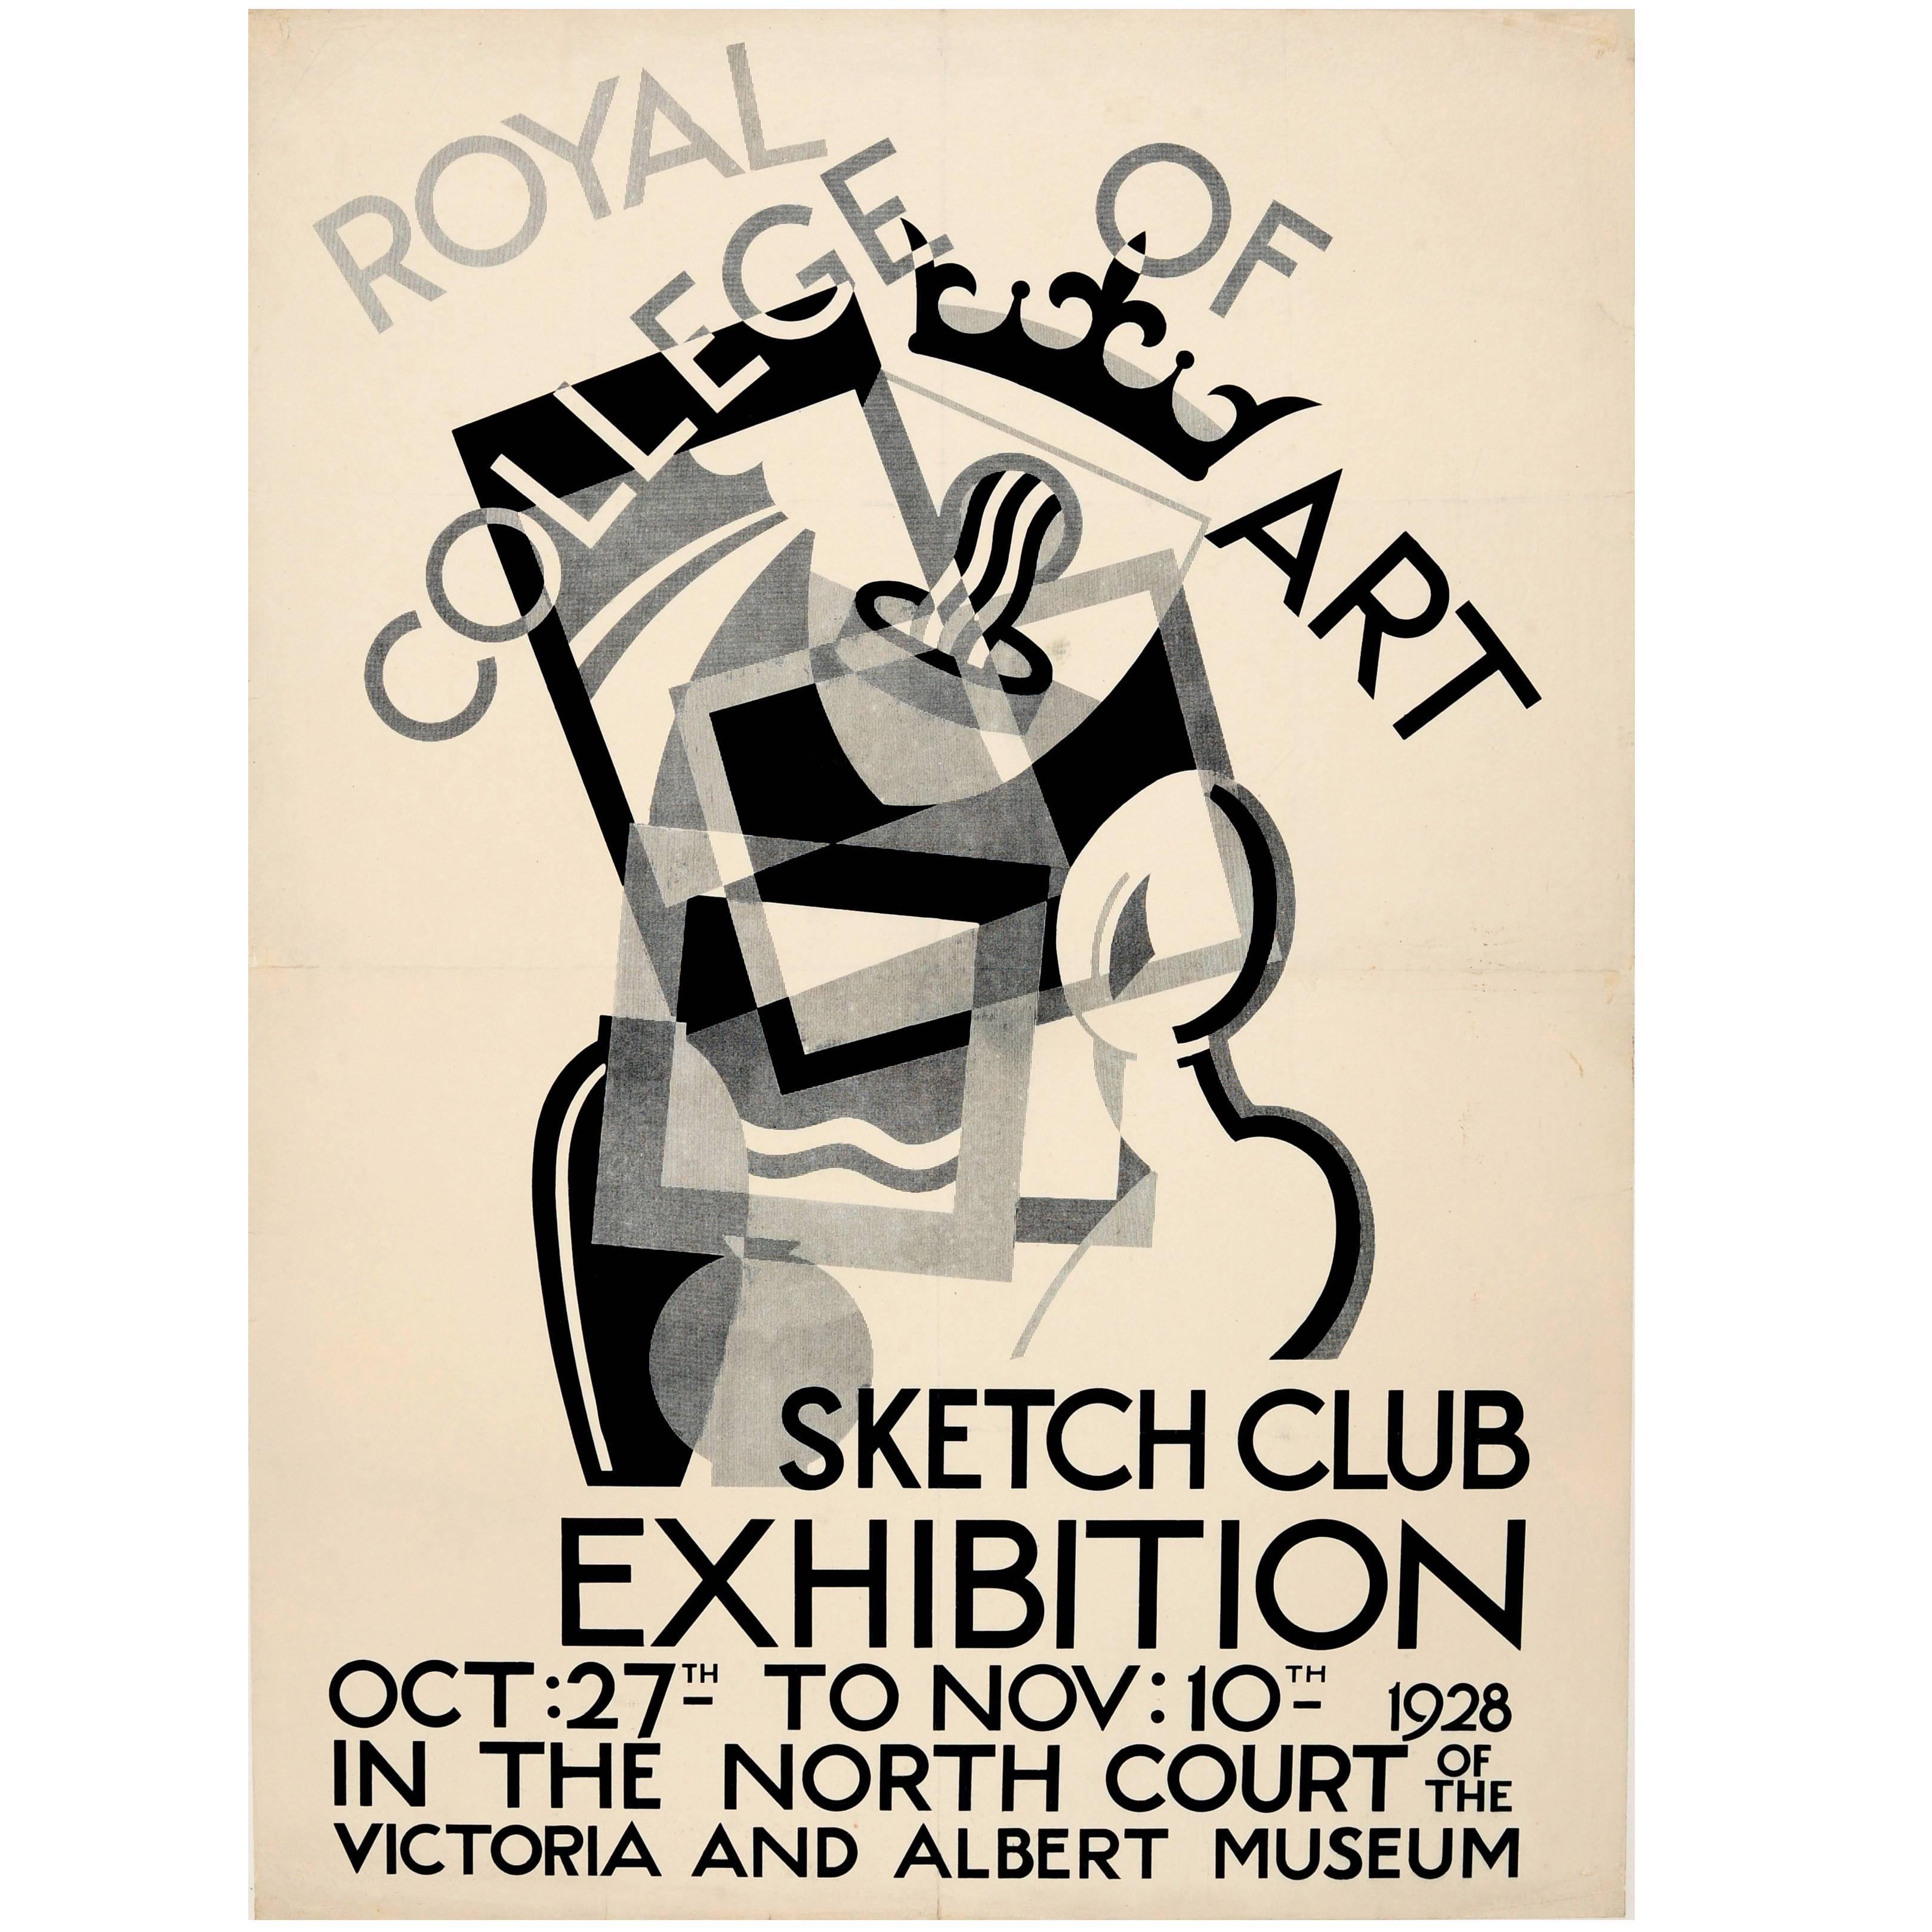 Original Vintage Royal College of Art Sketch Club Exhibition Poster V&A Museum